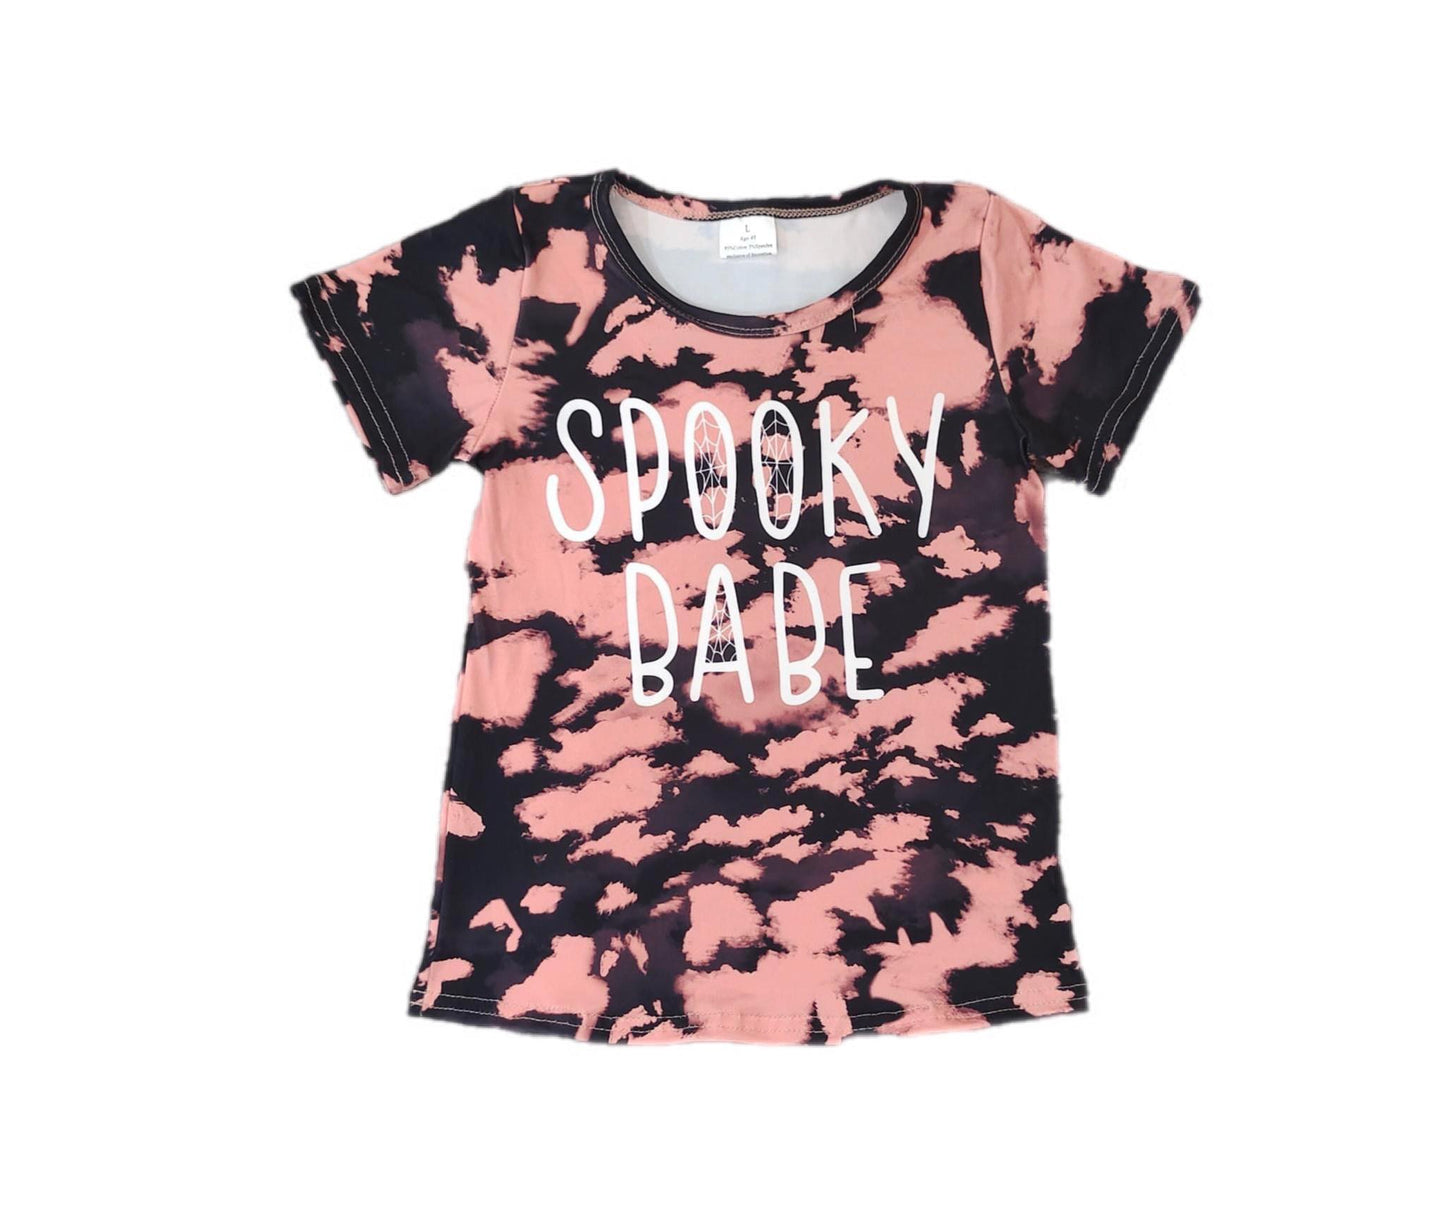 ᴡᴇᴇᴋʟʏ ᴘʀᴇ ᴏʀᴅᴇʀ Halloween Spooky Babe Top